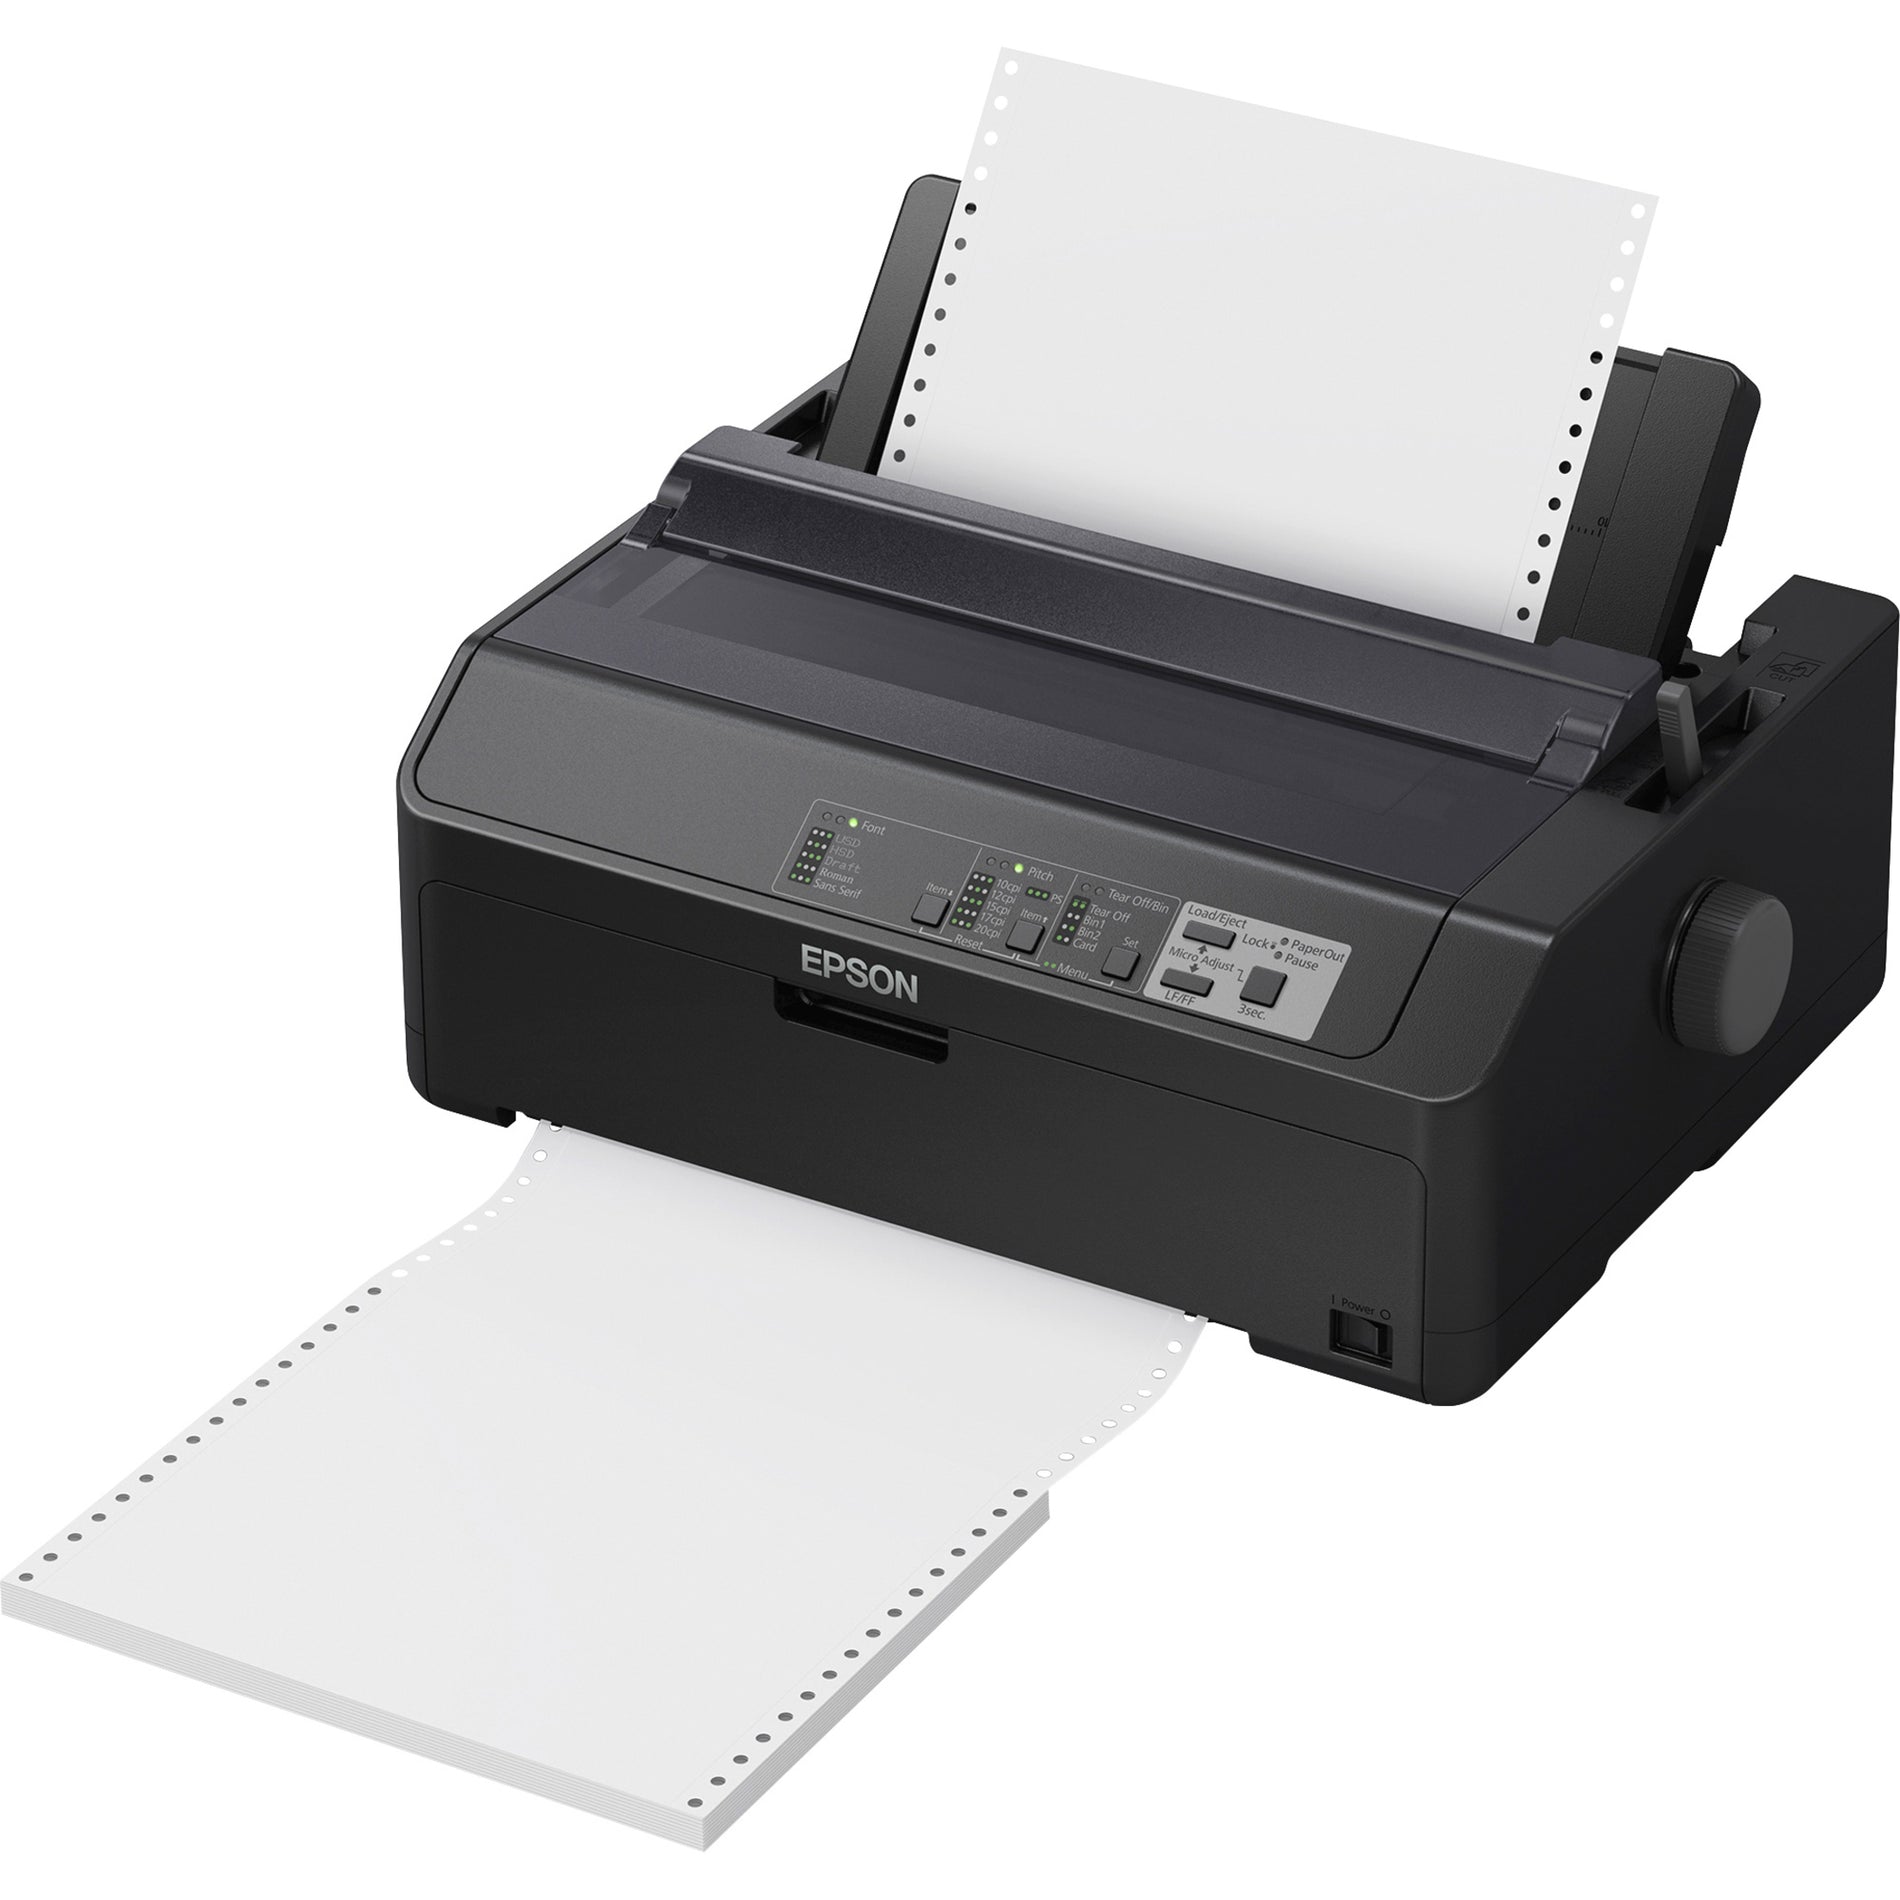 Epson C11CF37201 FX-890II Impact Printer, 9-Pin, Serial Dot Matrix, 55dB, Black/Gray